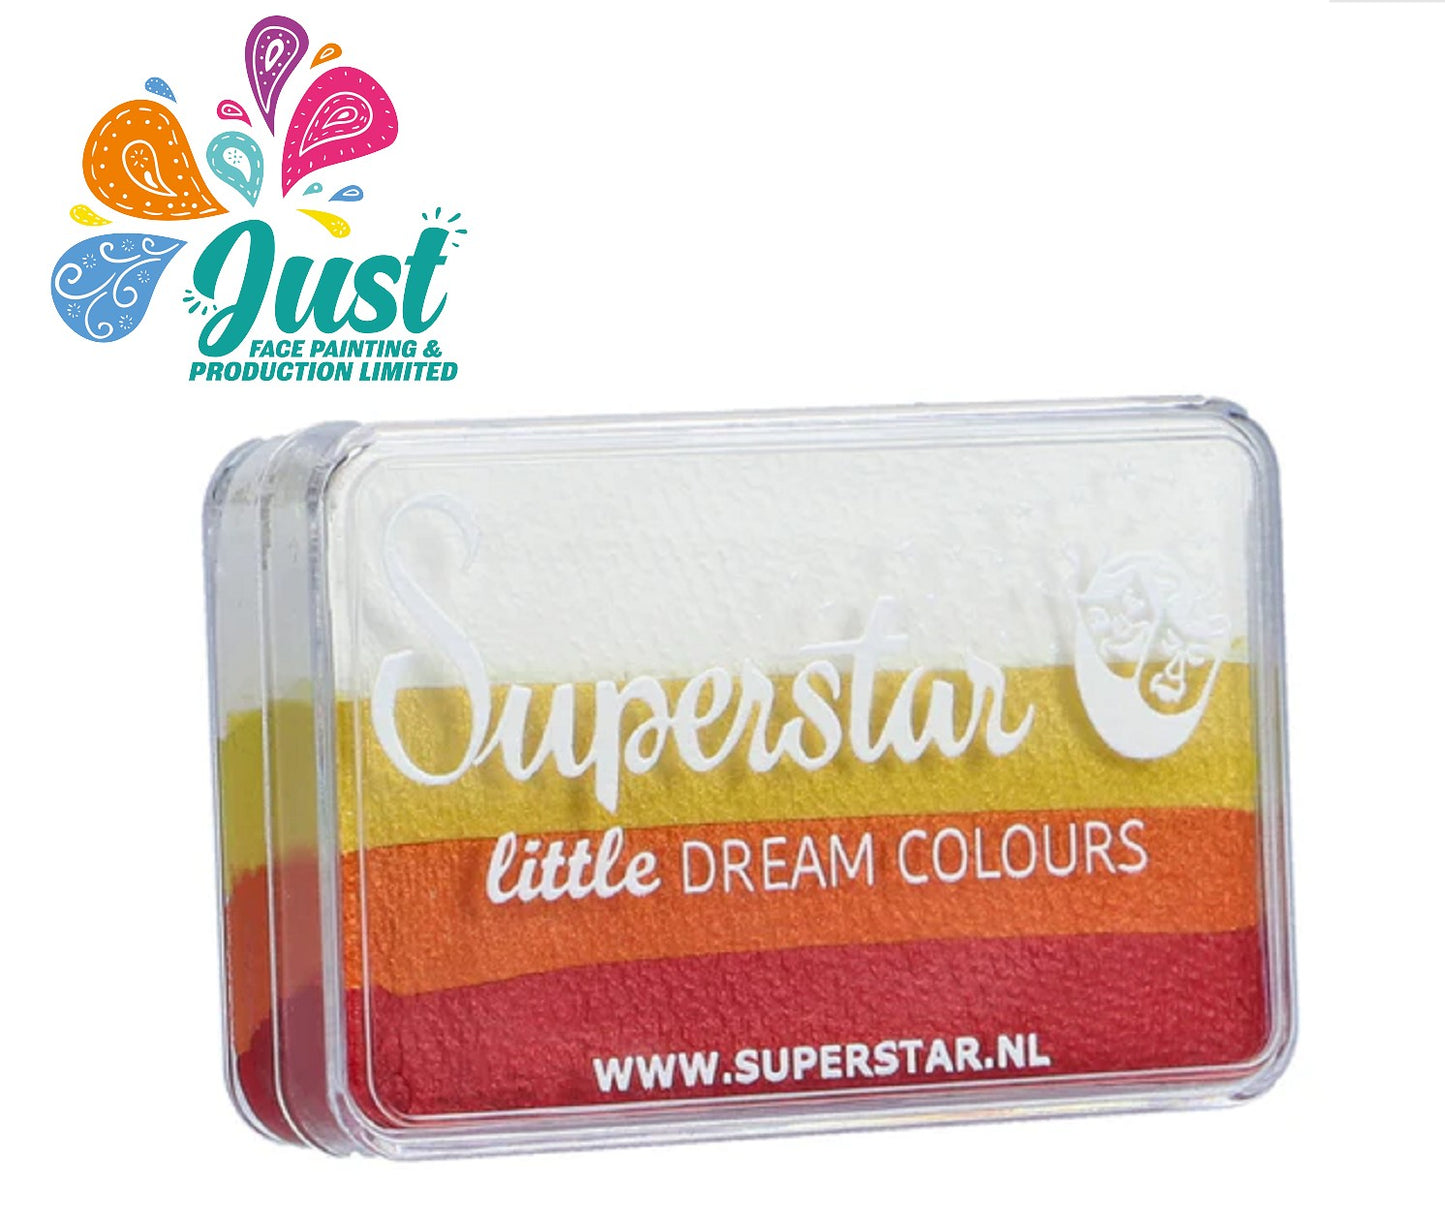 Superstar - Littler Colours Rainbow cake 30G - Little MAGIC SUNRISE (1 pc)